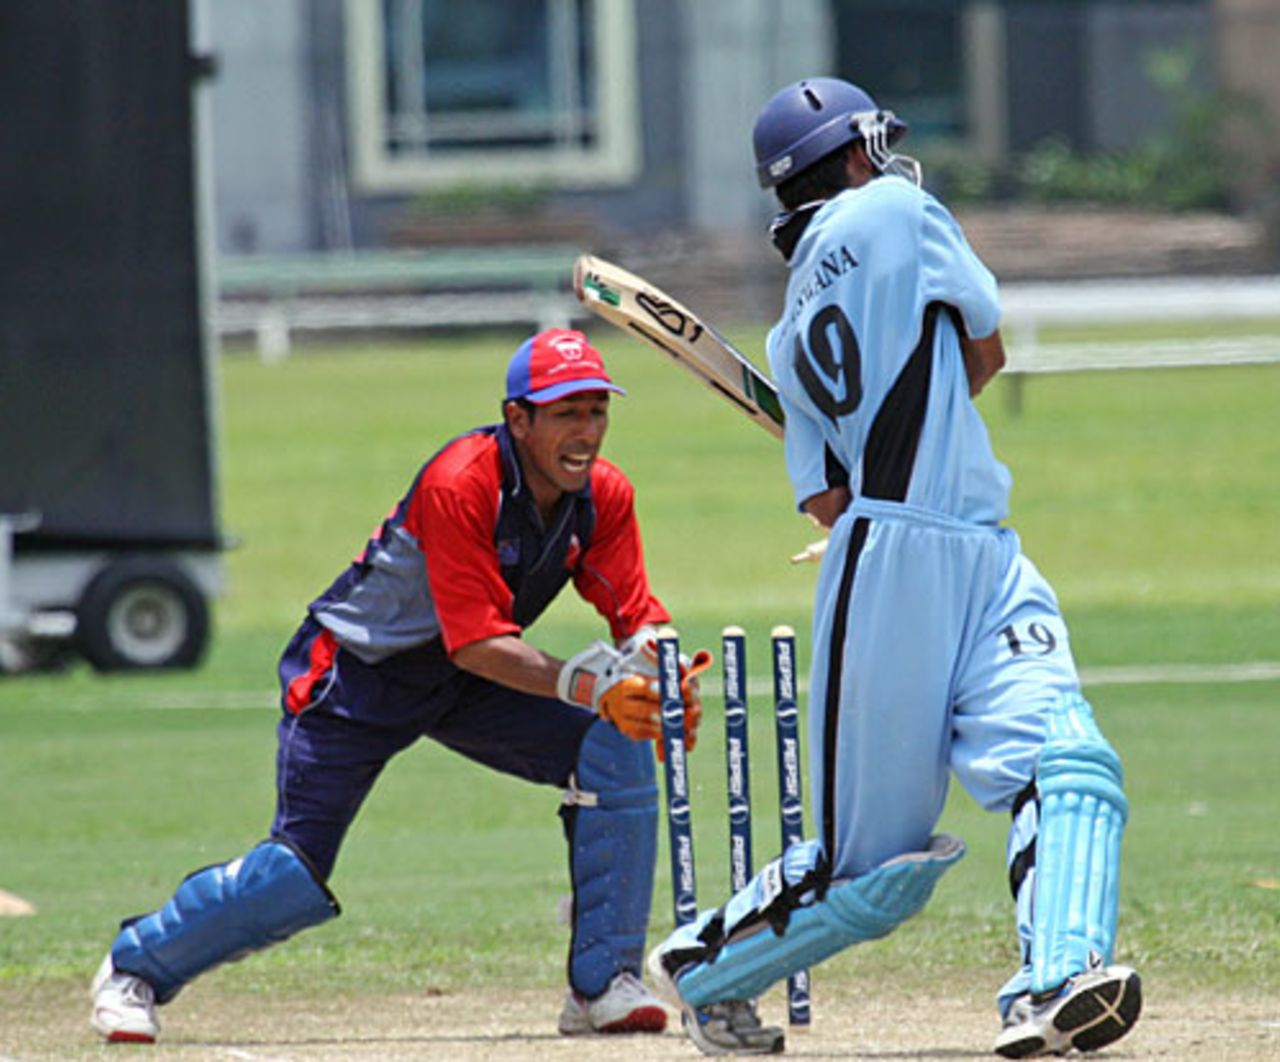 Taroesh Trivedi is stumped by Shahzad Ahmed, Bahrain v Botswana, ICC World Cricket League Division 6, Singapore, September 2, 2009